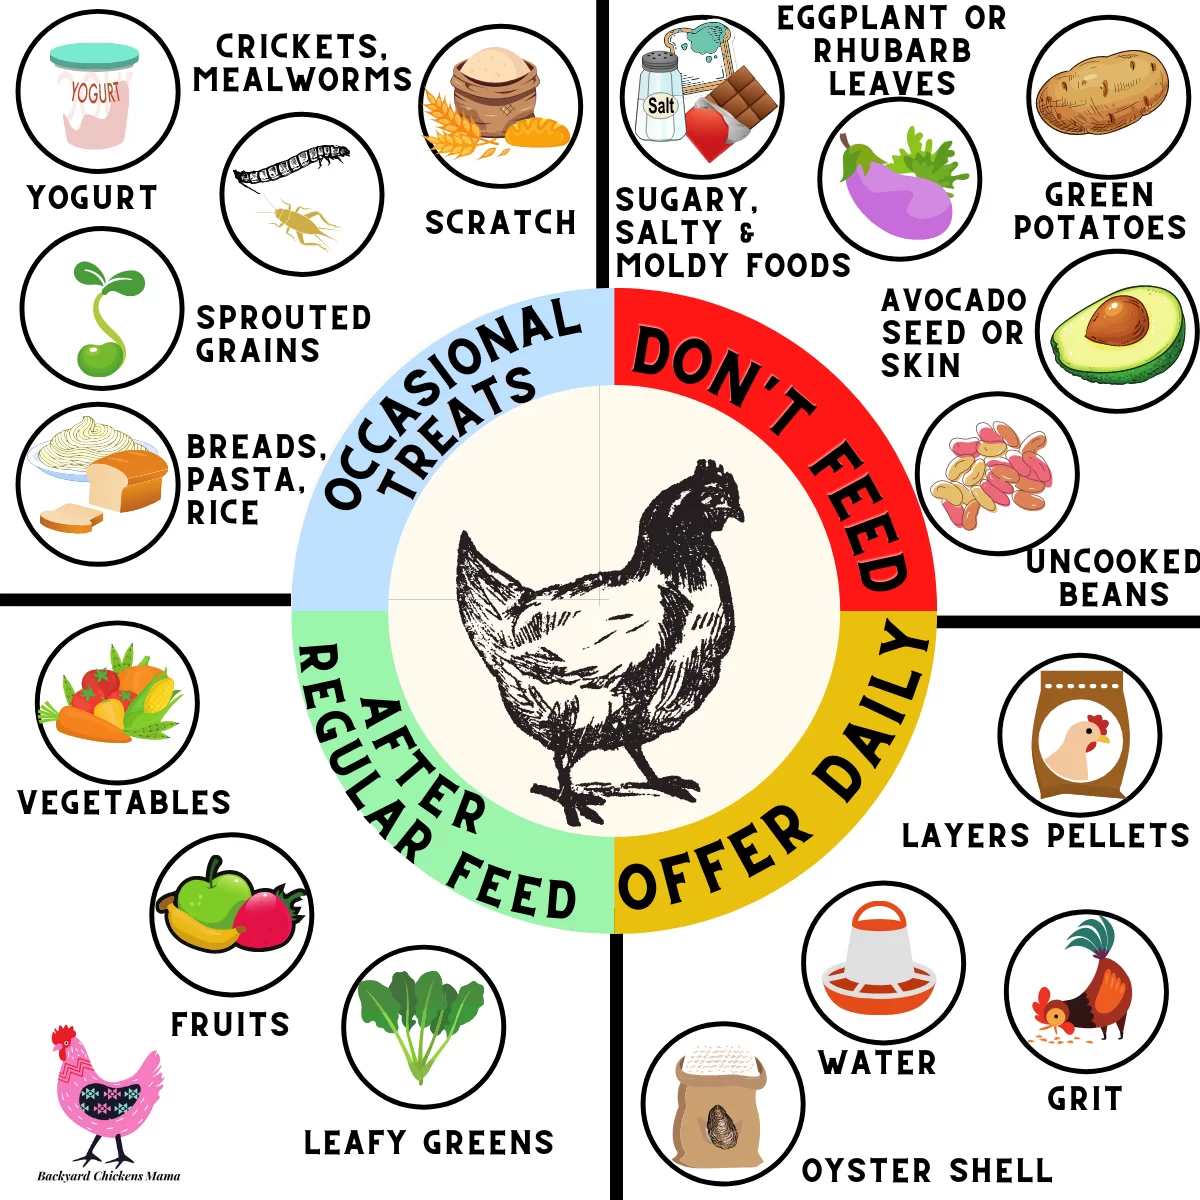 Backyard Chicken Treat Chart